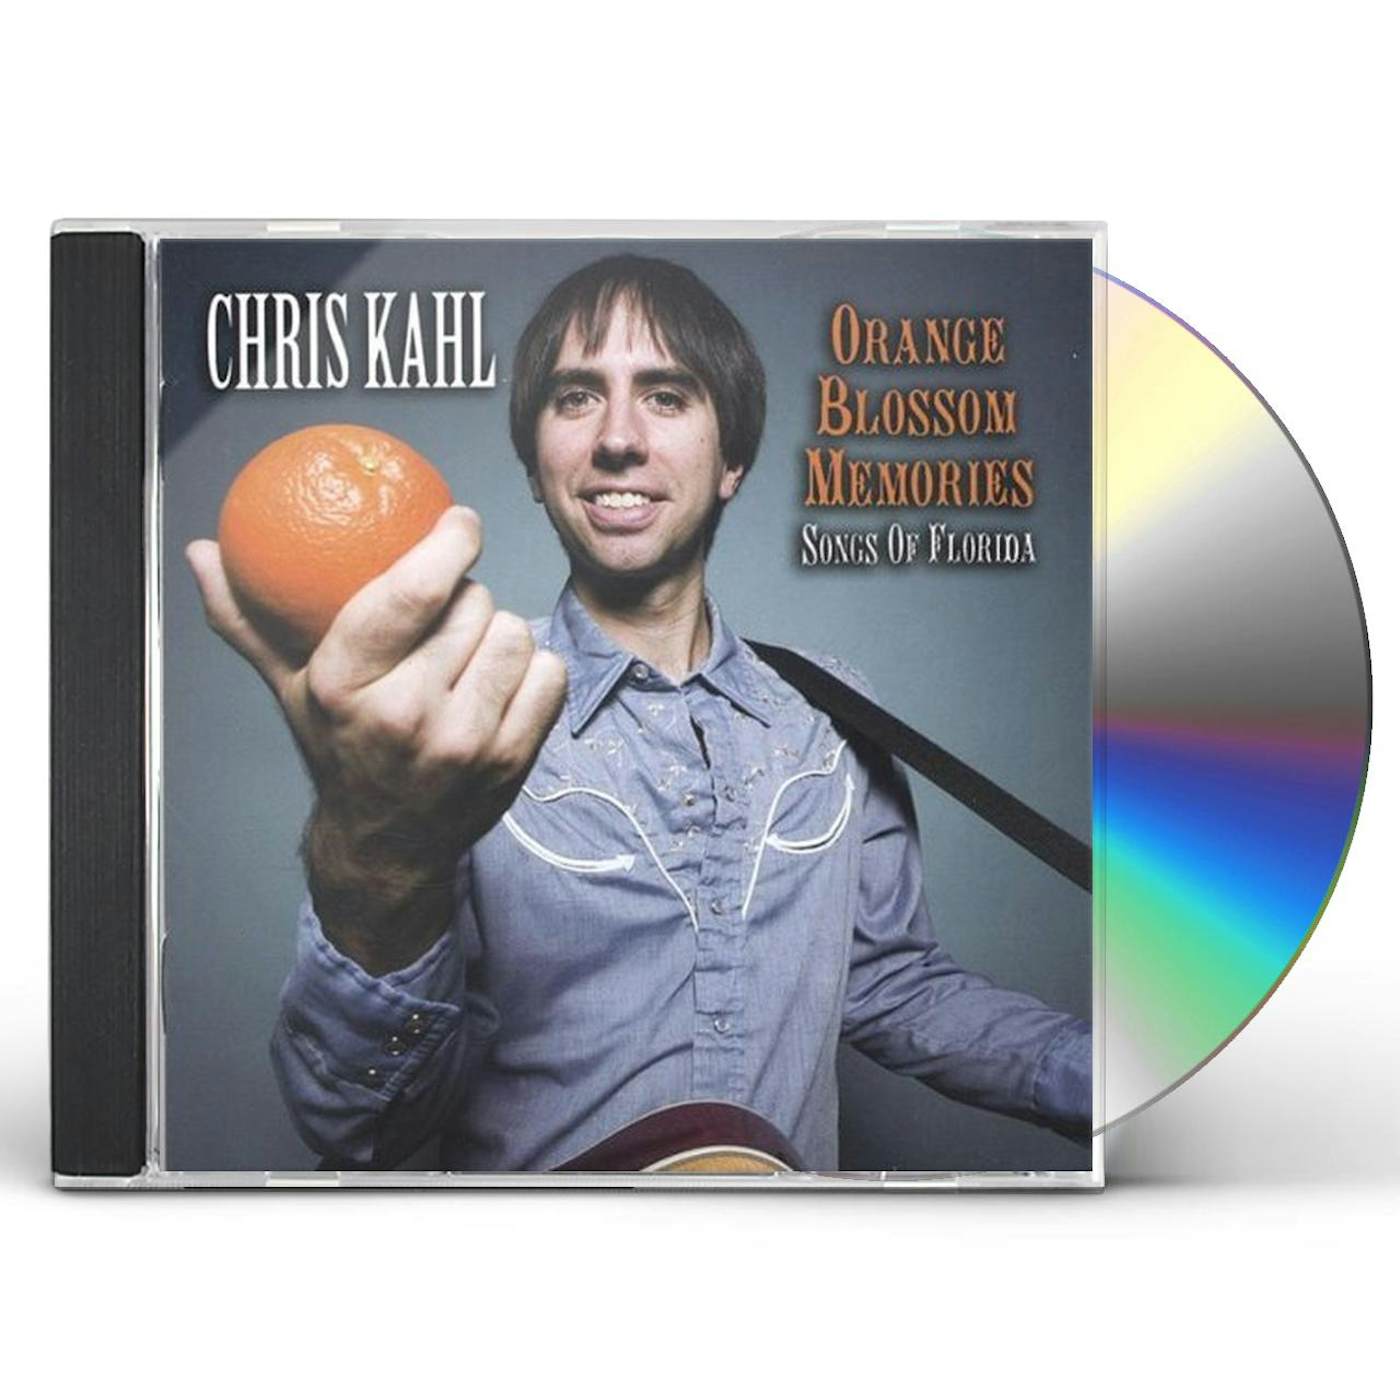 Chris Kahl ORANGE BLOSSOM MEMORIES CD